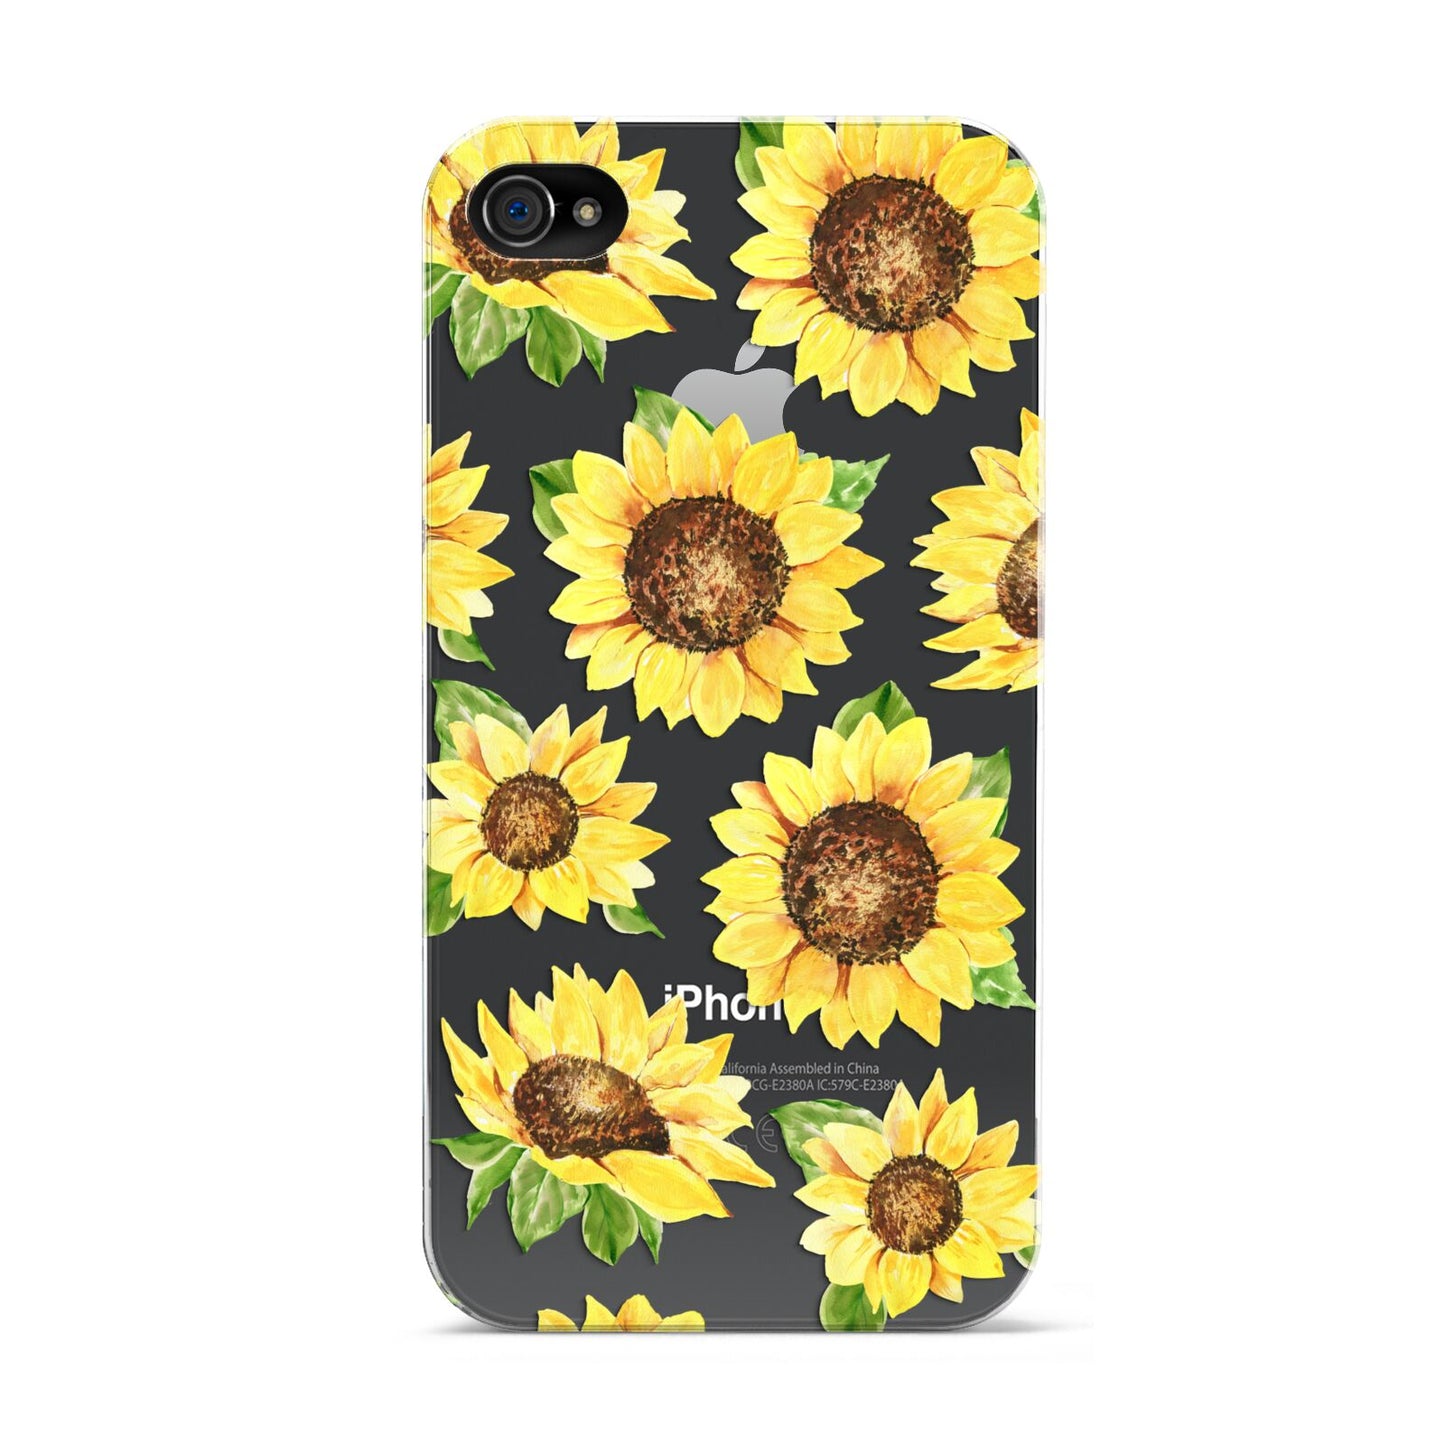 Sunflowers Apple iPhone 4s Case